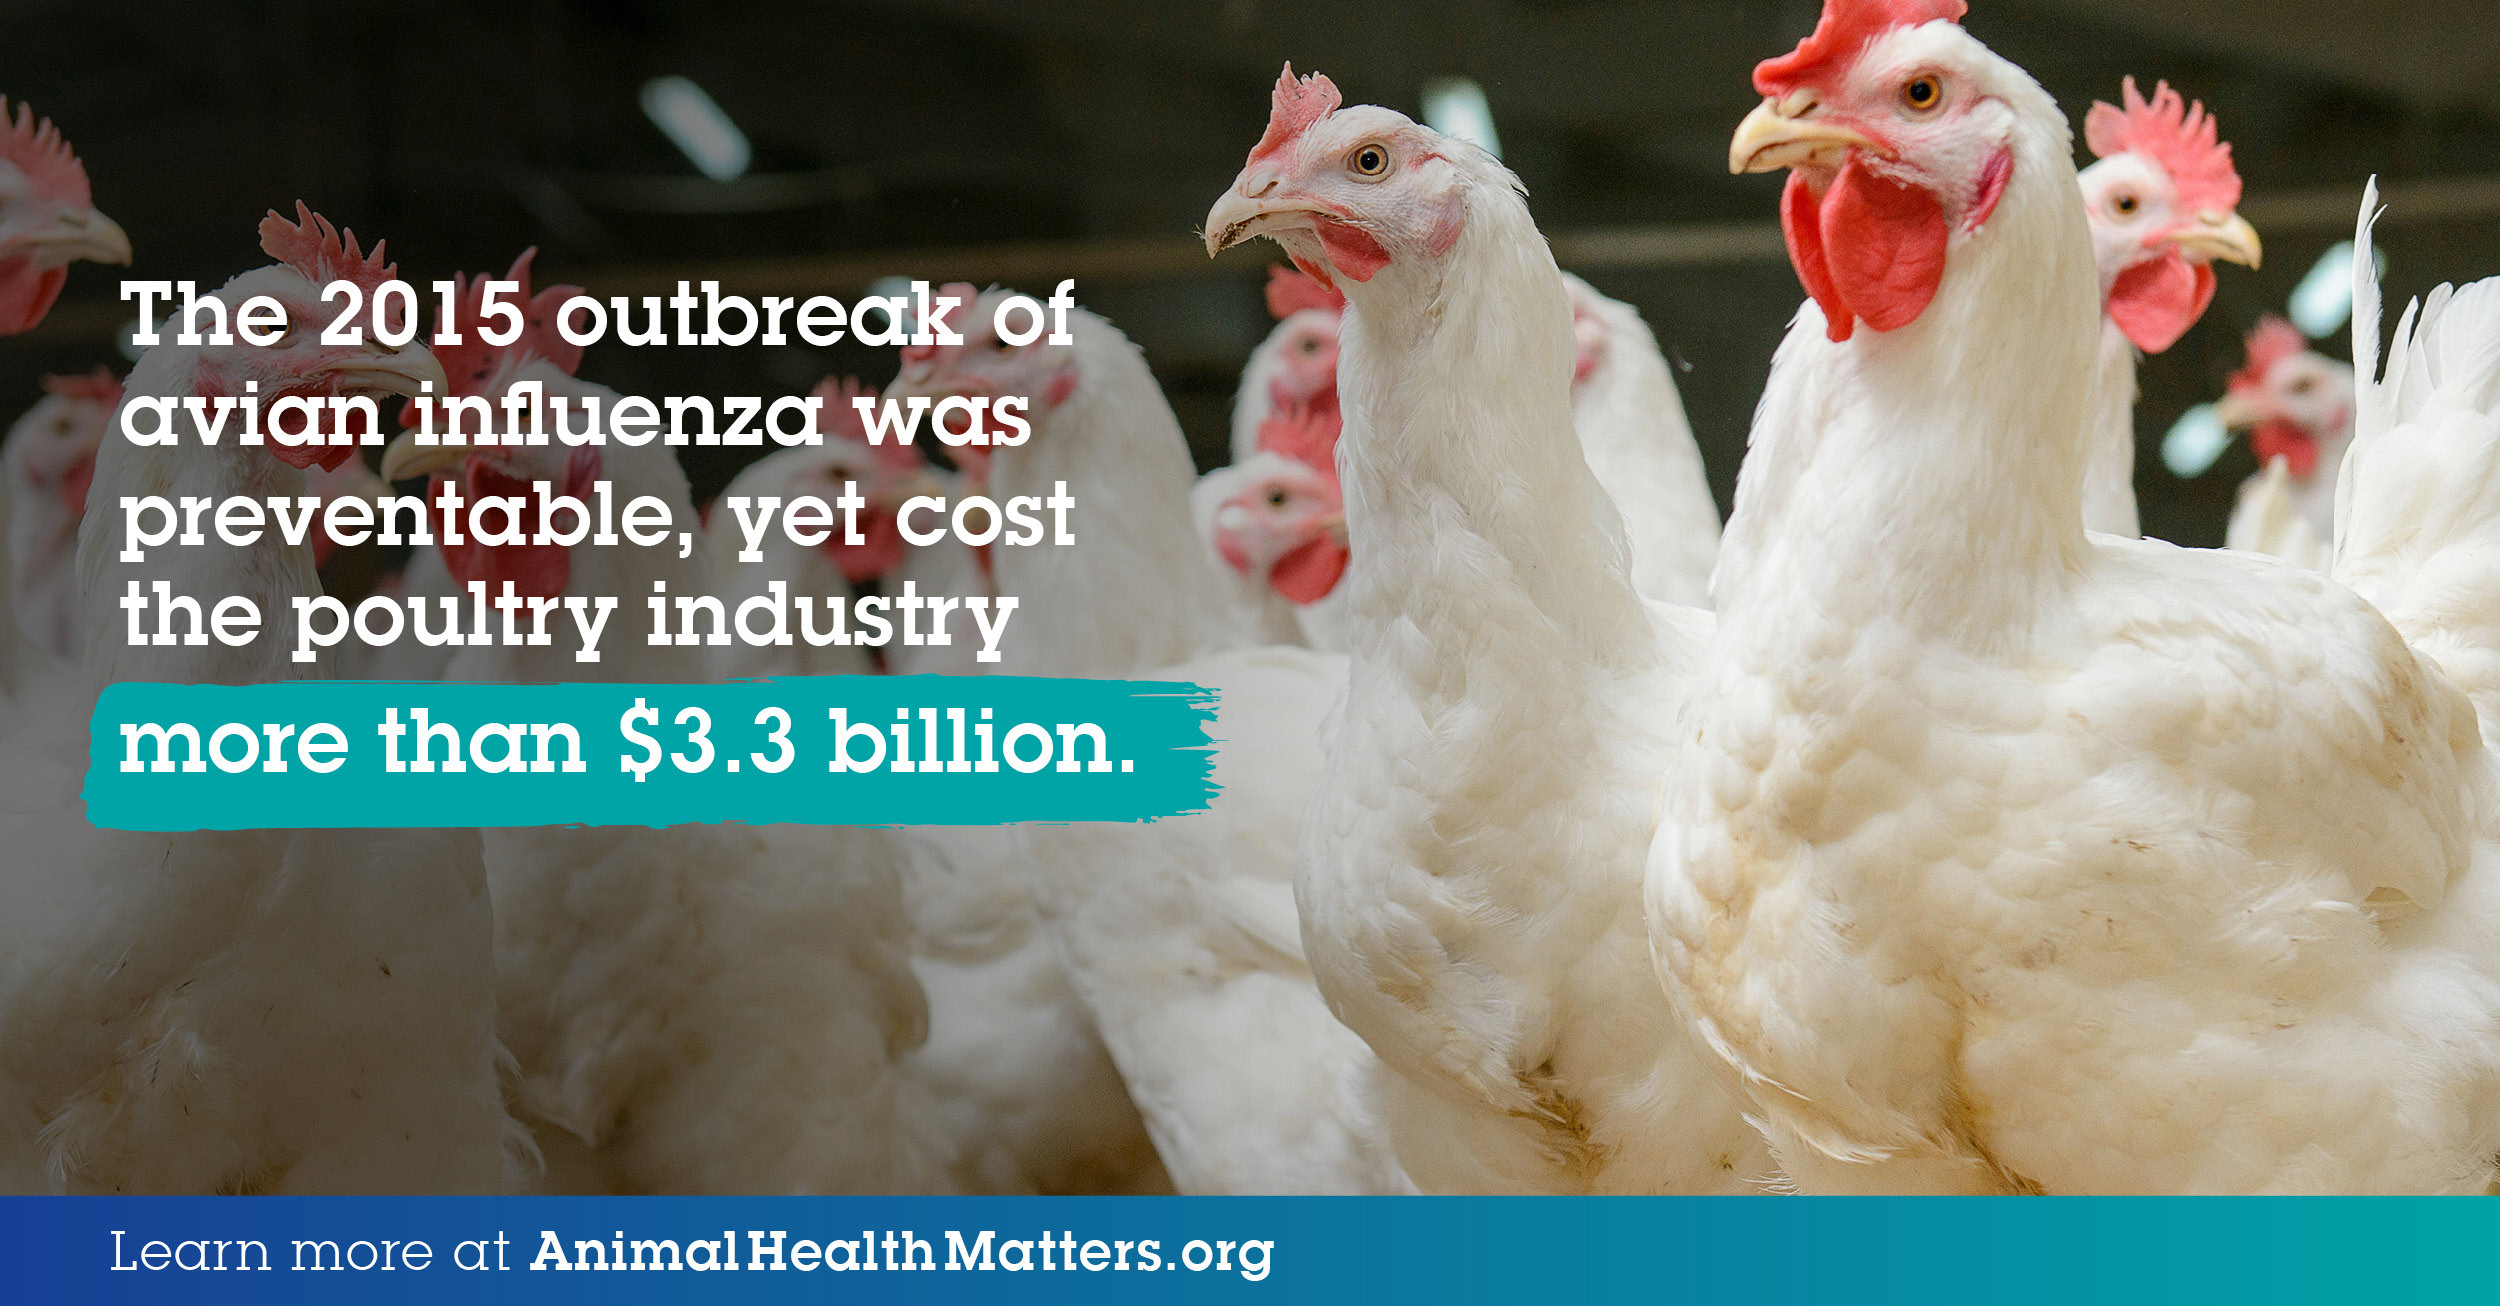 More than $3.3bn - Chickens.jpg